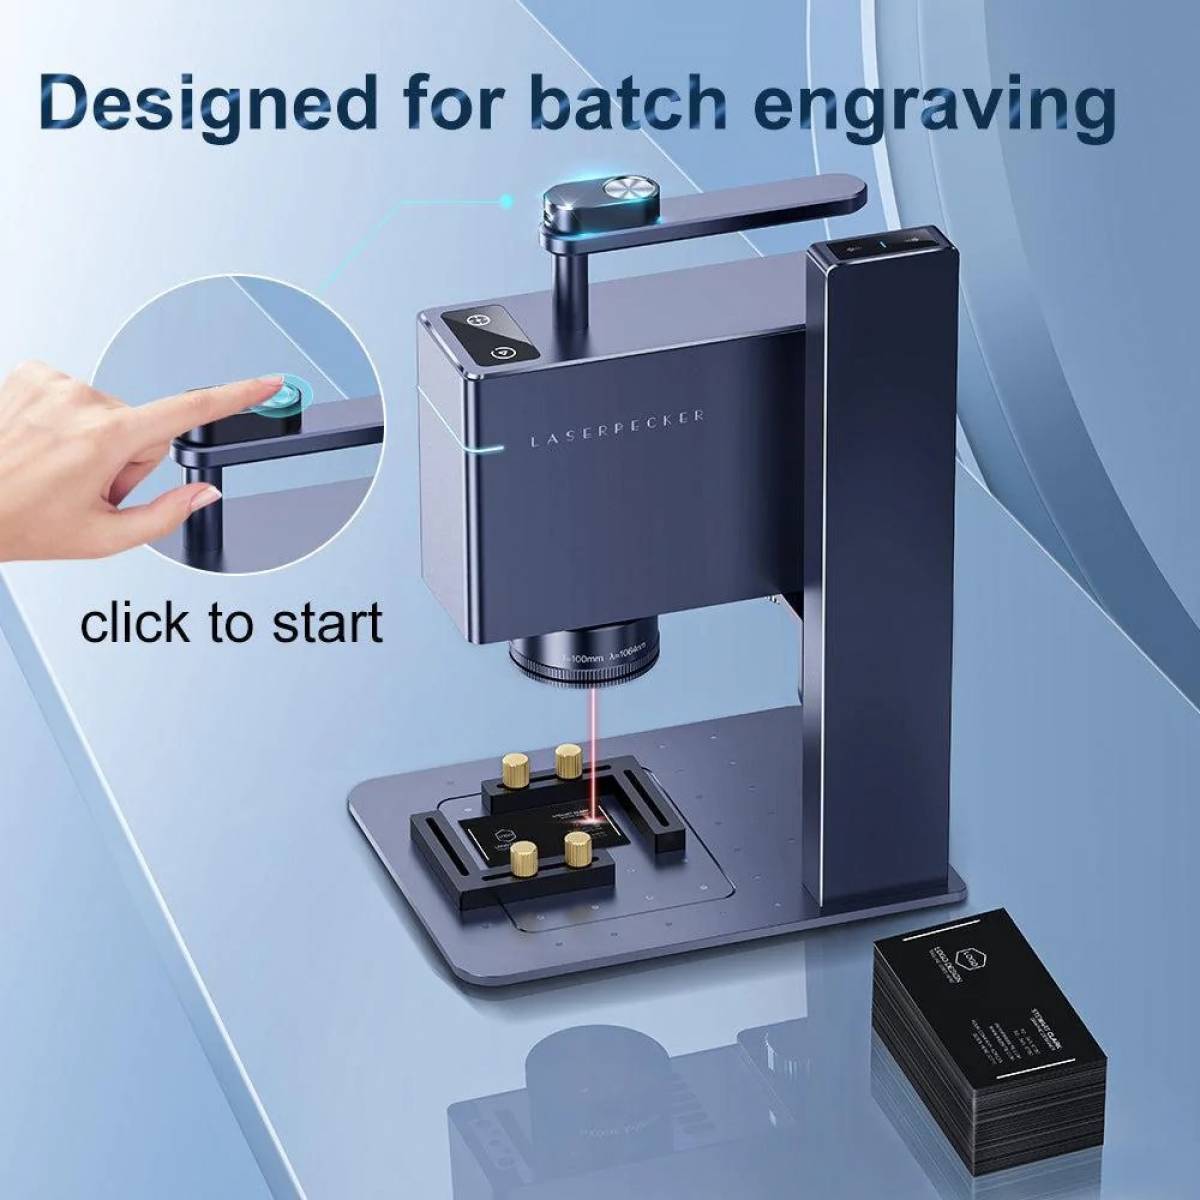 SCULPFUN S9 Laser Engraver Cutting Machine 5.5W 90W Effect High